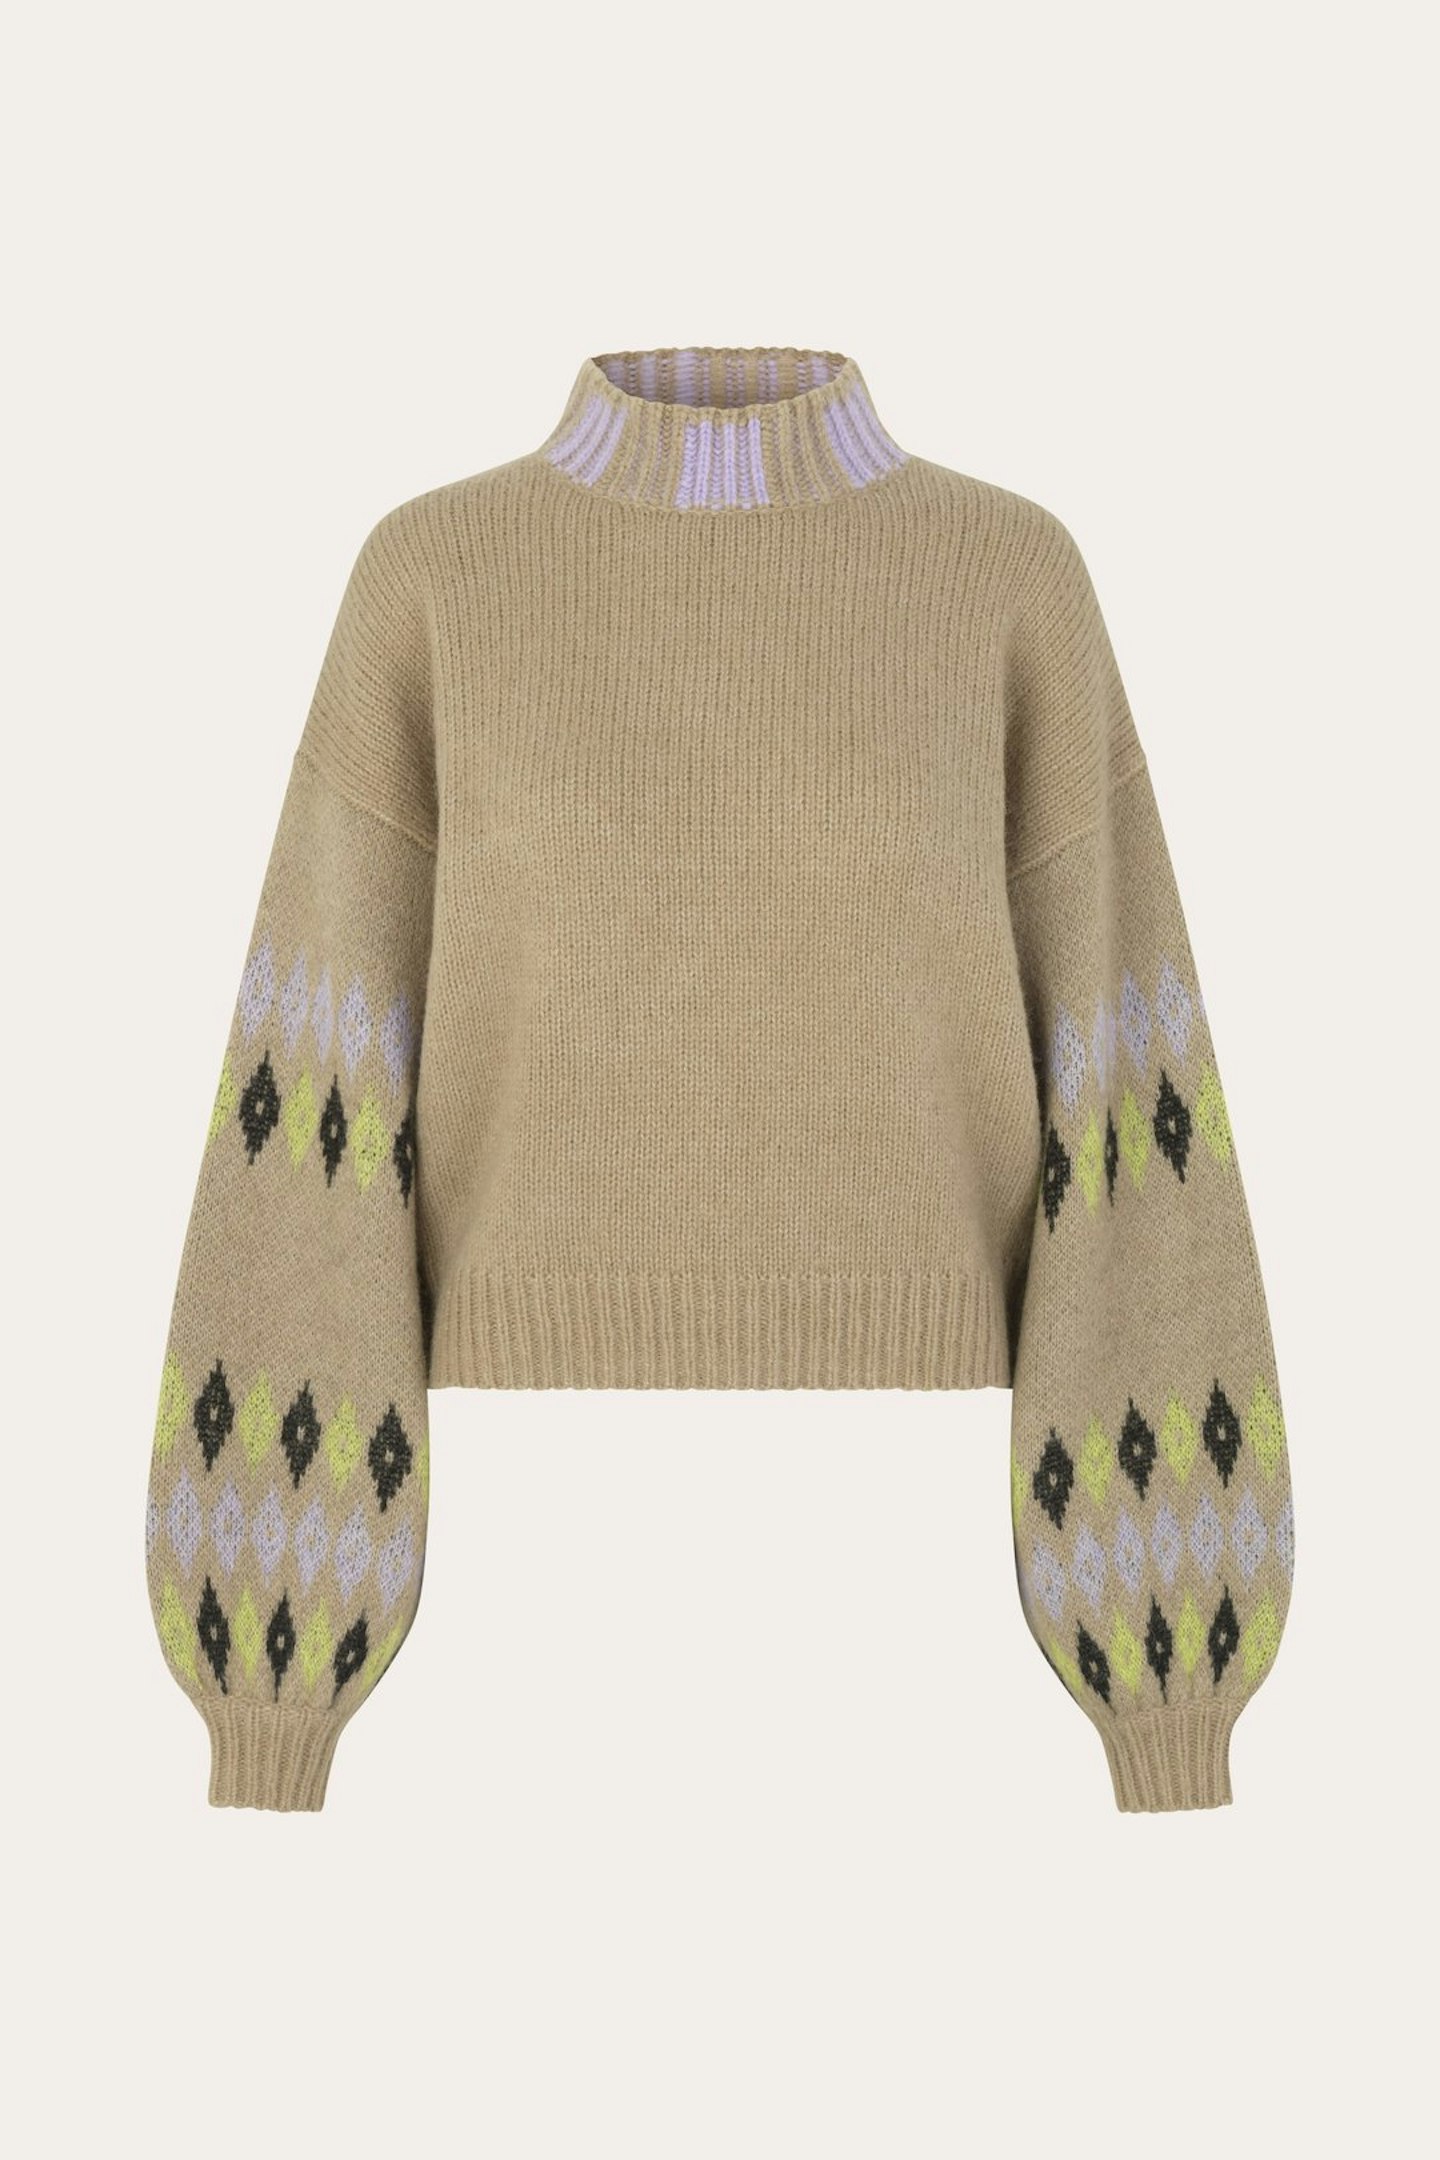 Stine Goya, Adonis Sweater, £260